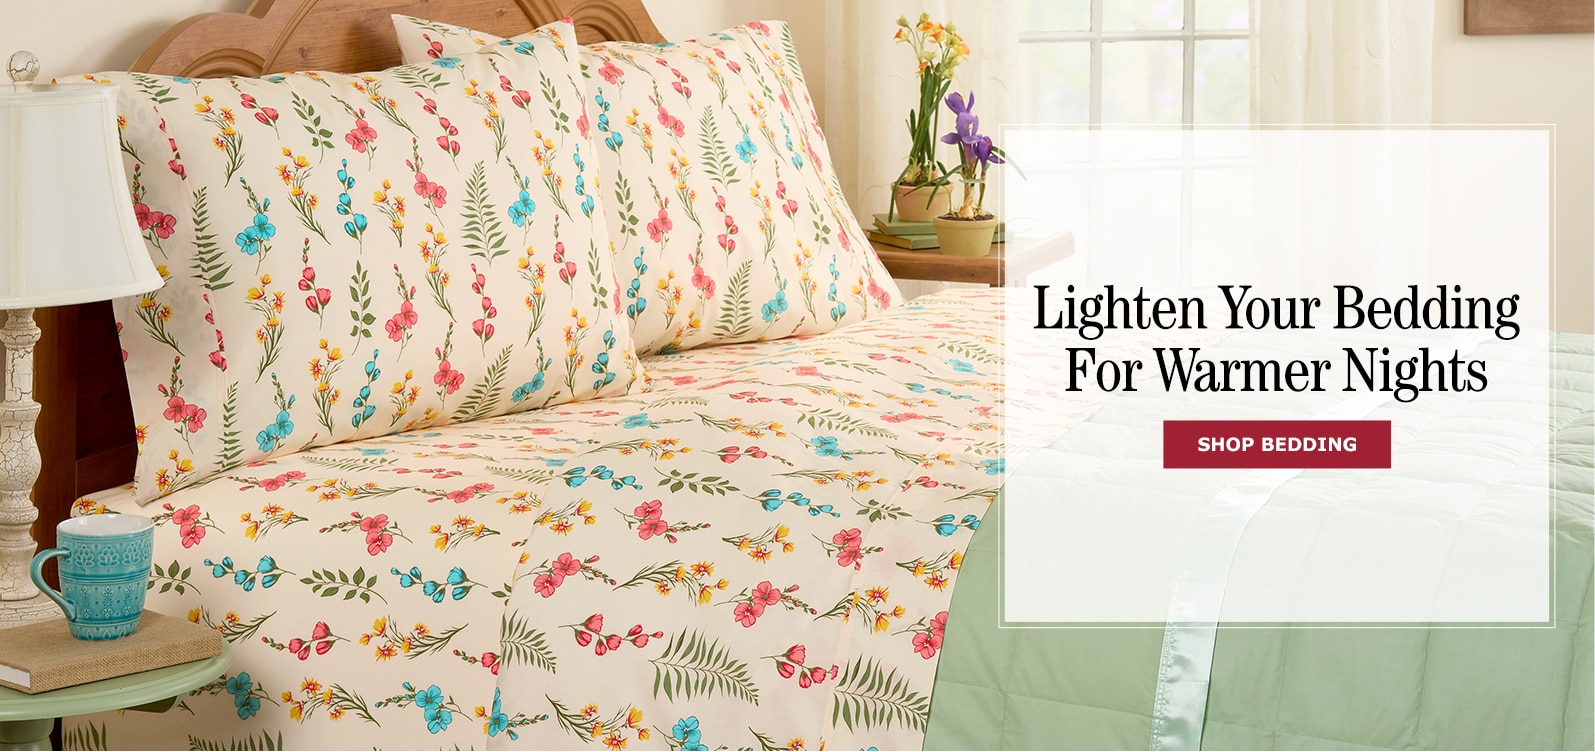 Lighten Your Bedding for Warmer Nights. Shop Bedding